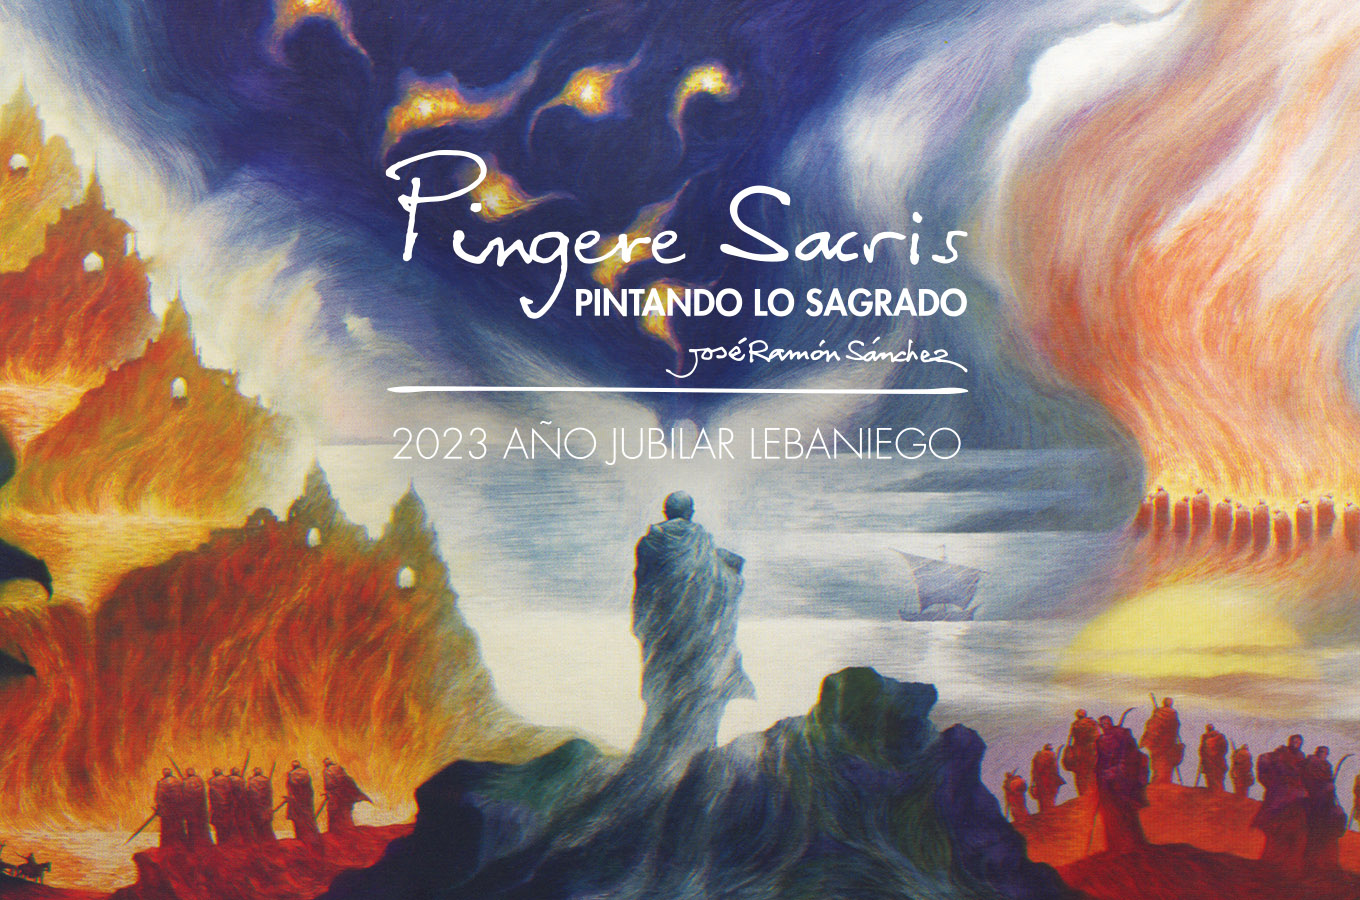 Pingere Sacris - Pintando lo sagrado